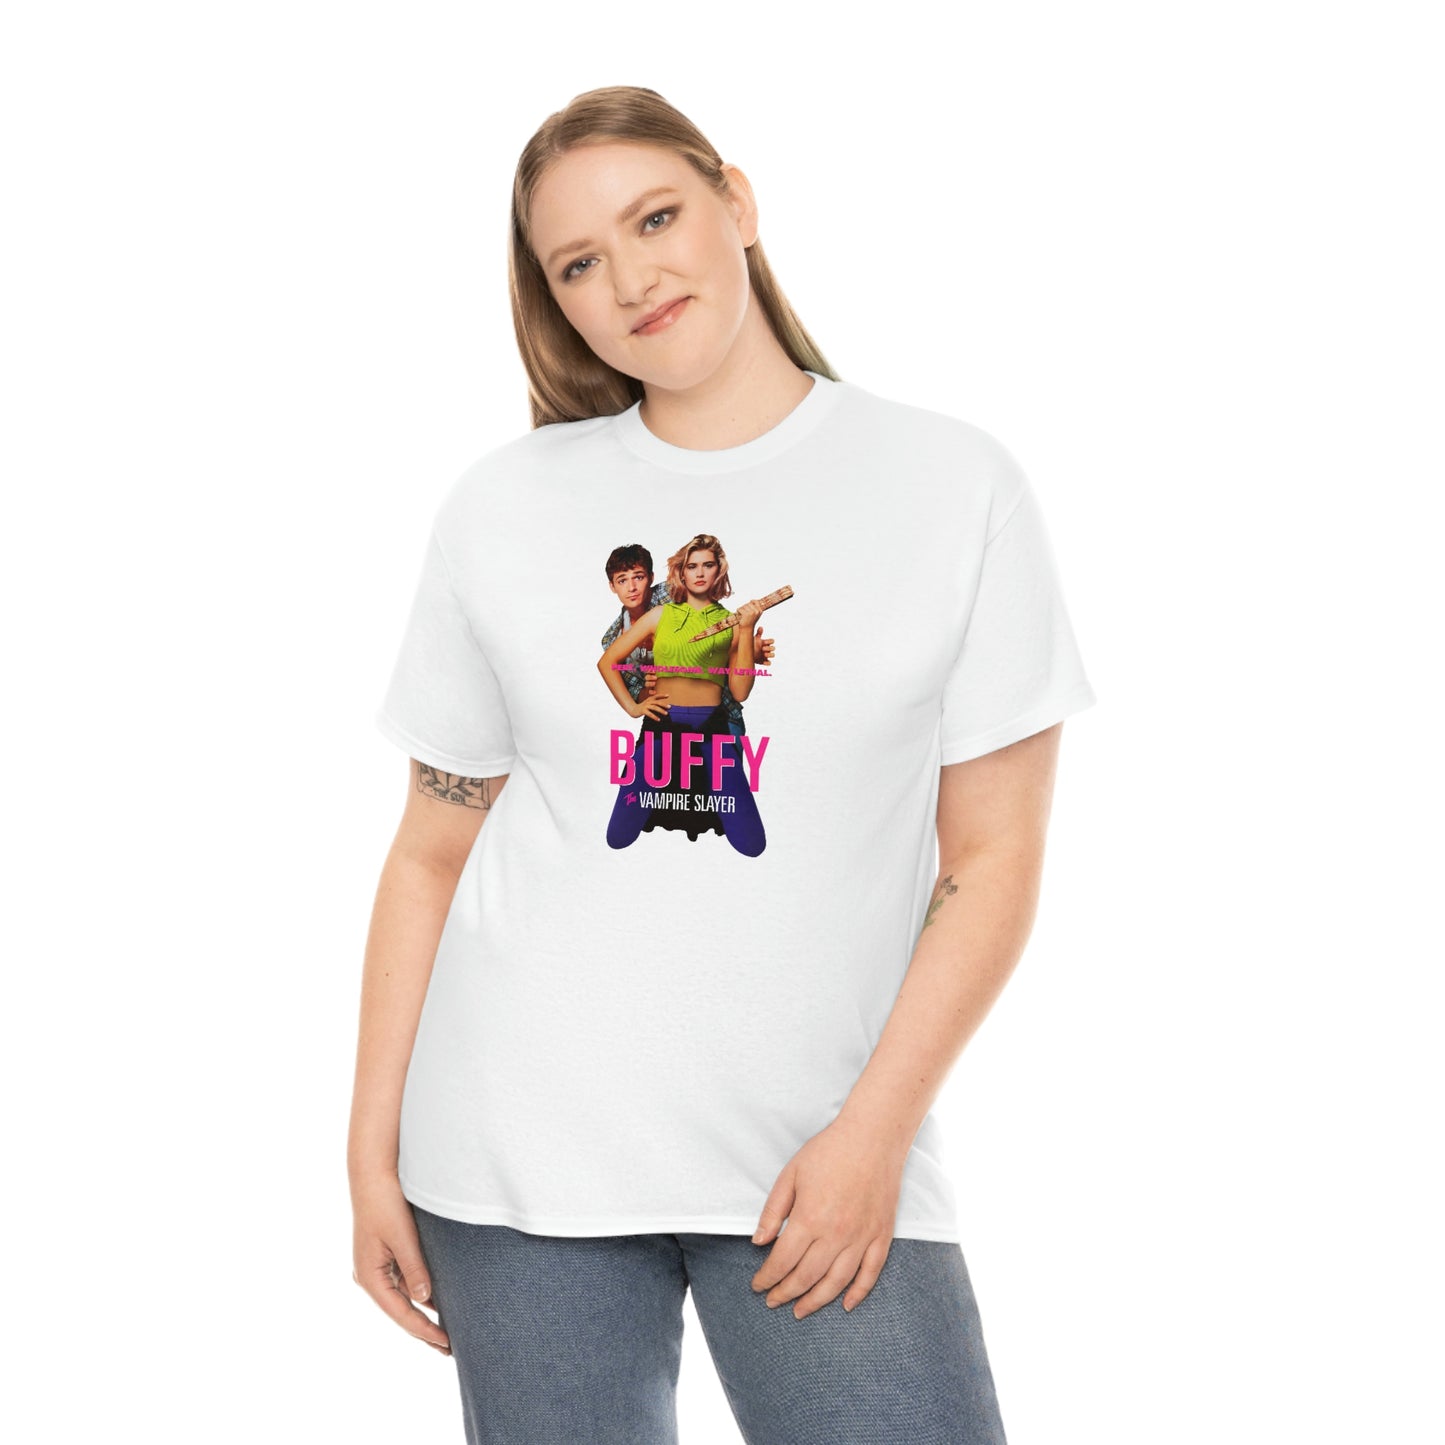 Buffy the Vampire Slayer T-Shirt